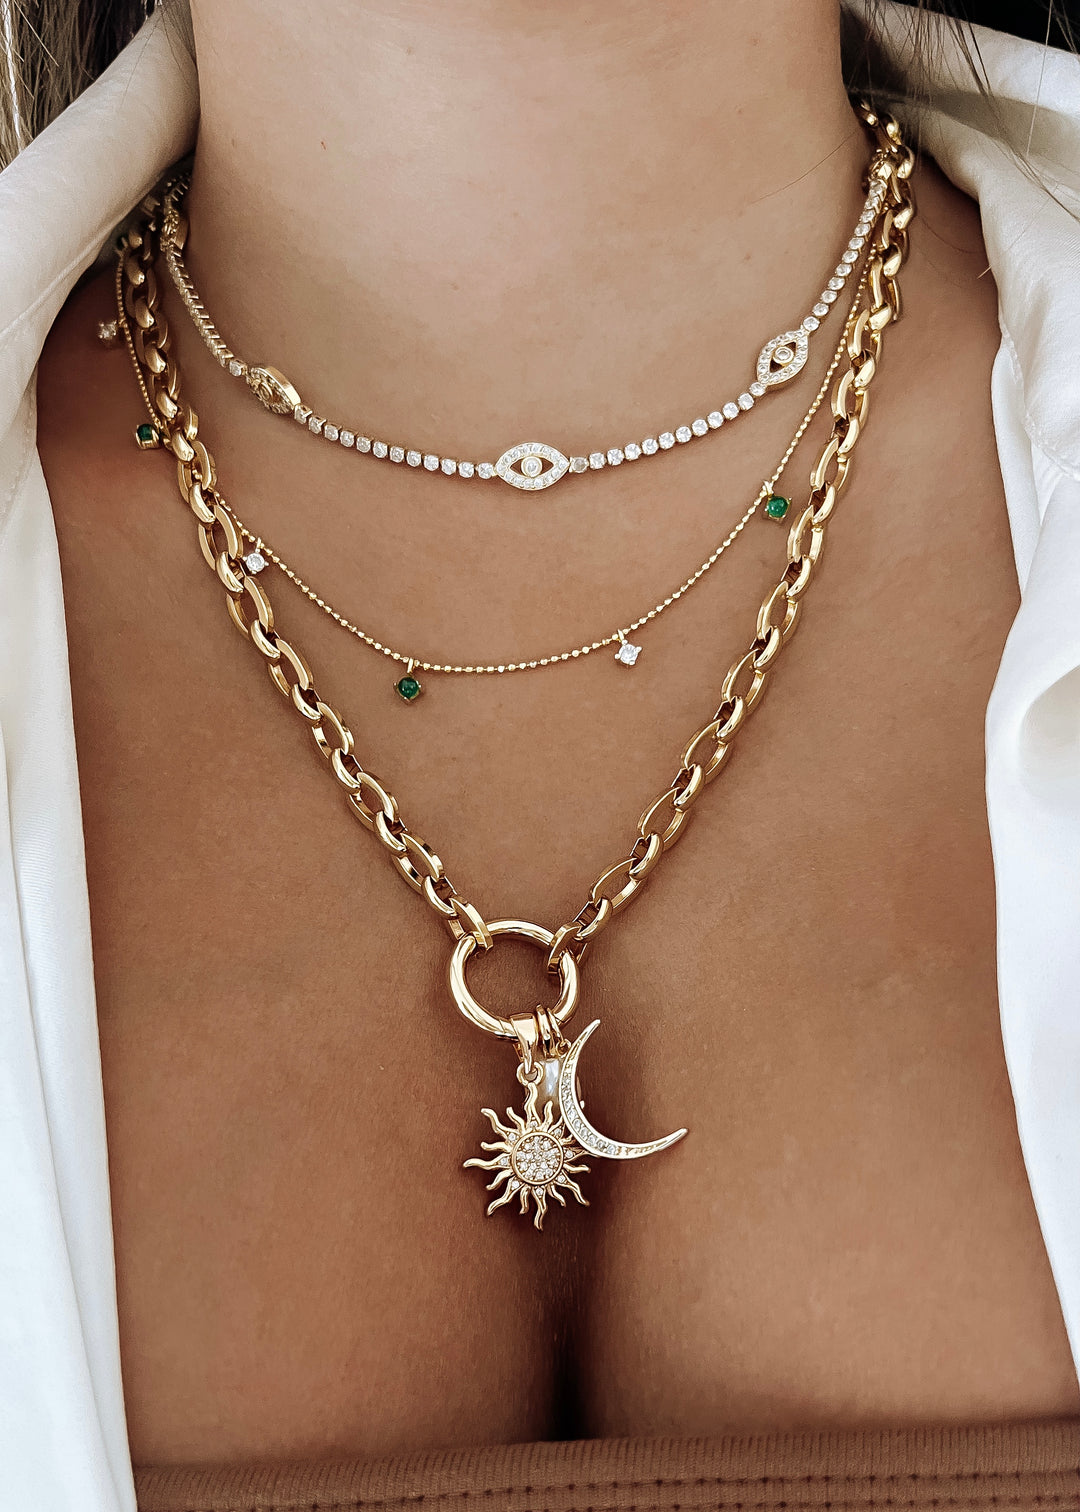 Celestial Light Sun & Moon Necklace - Gold Filled